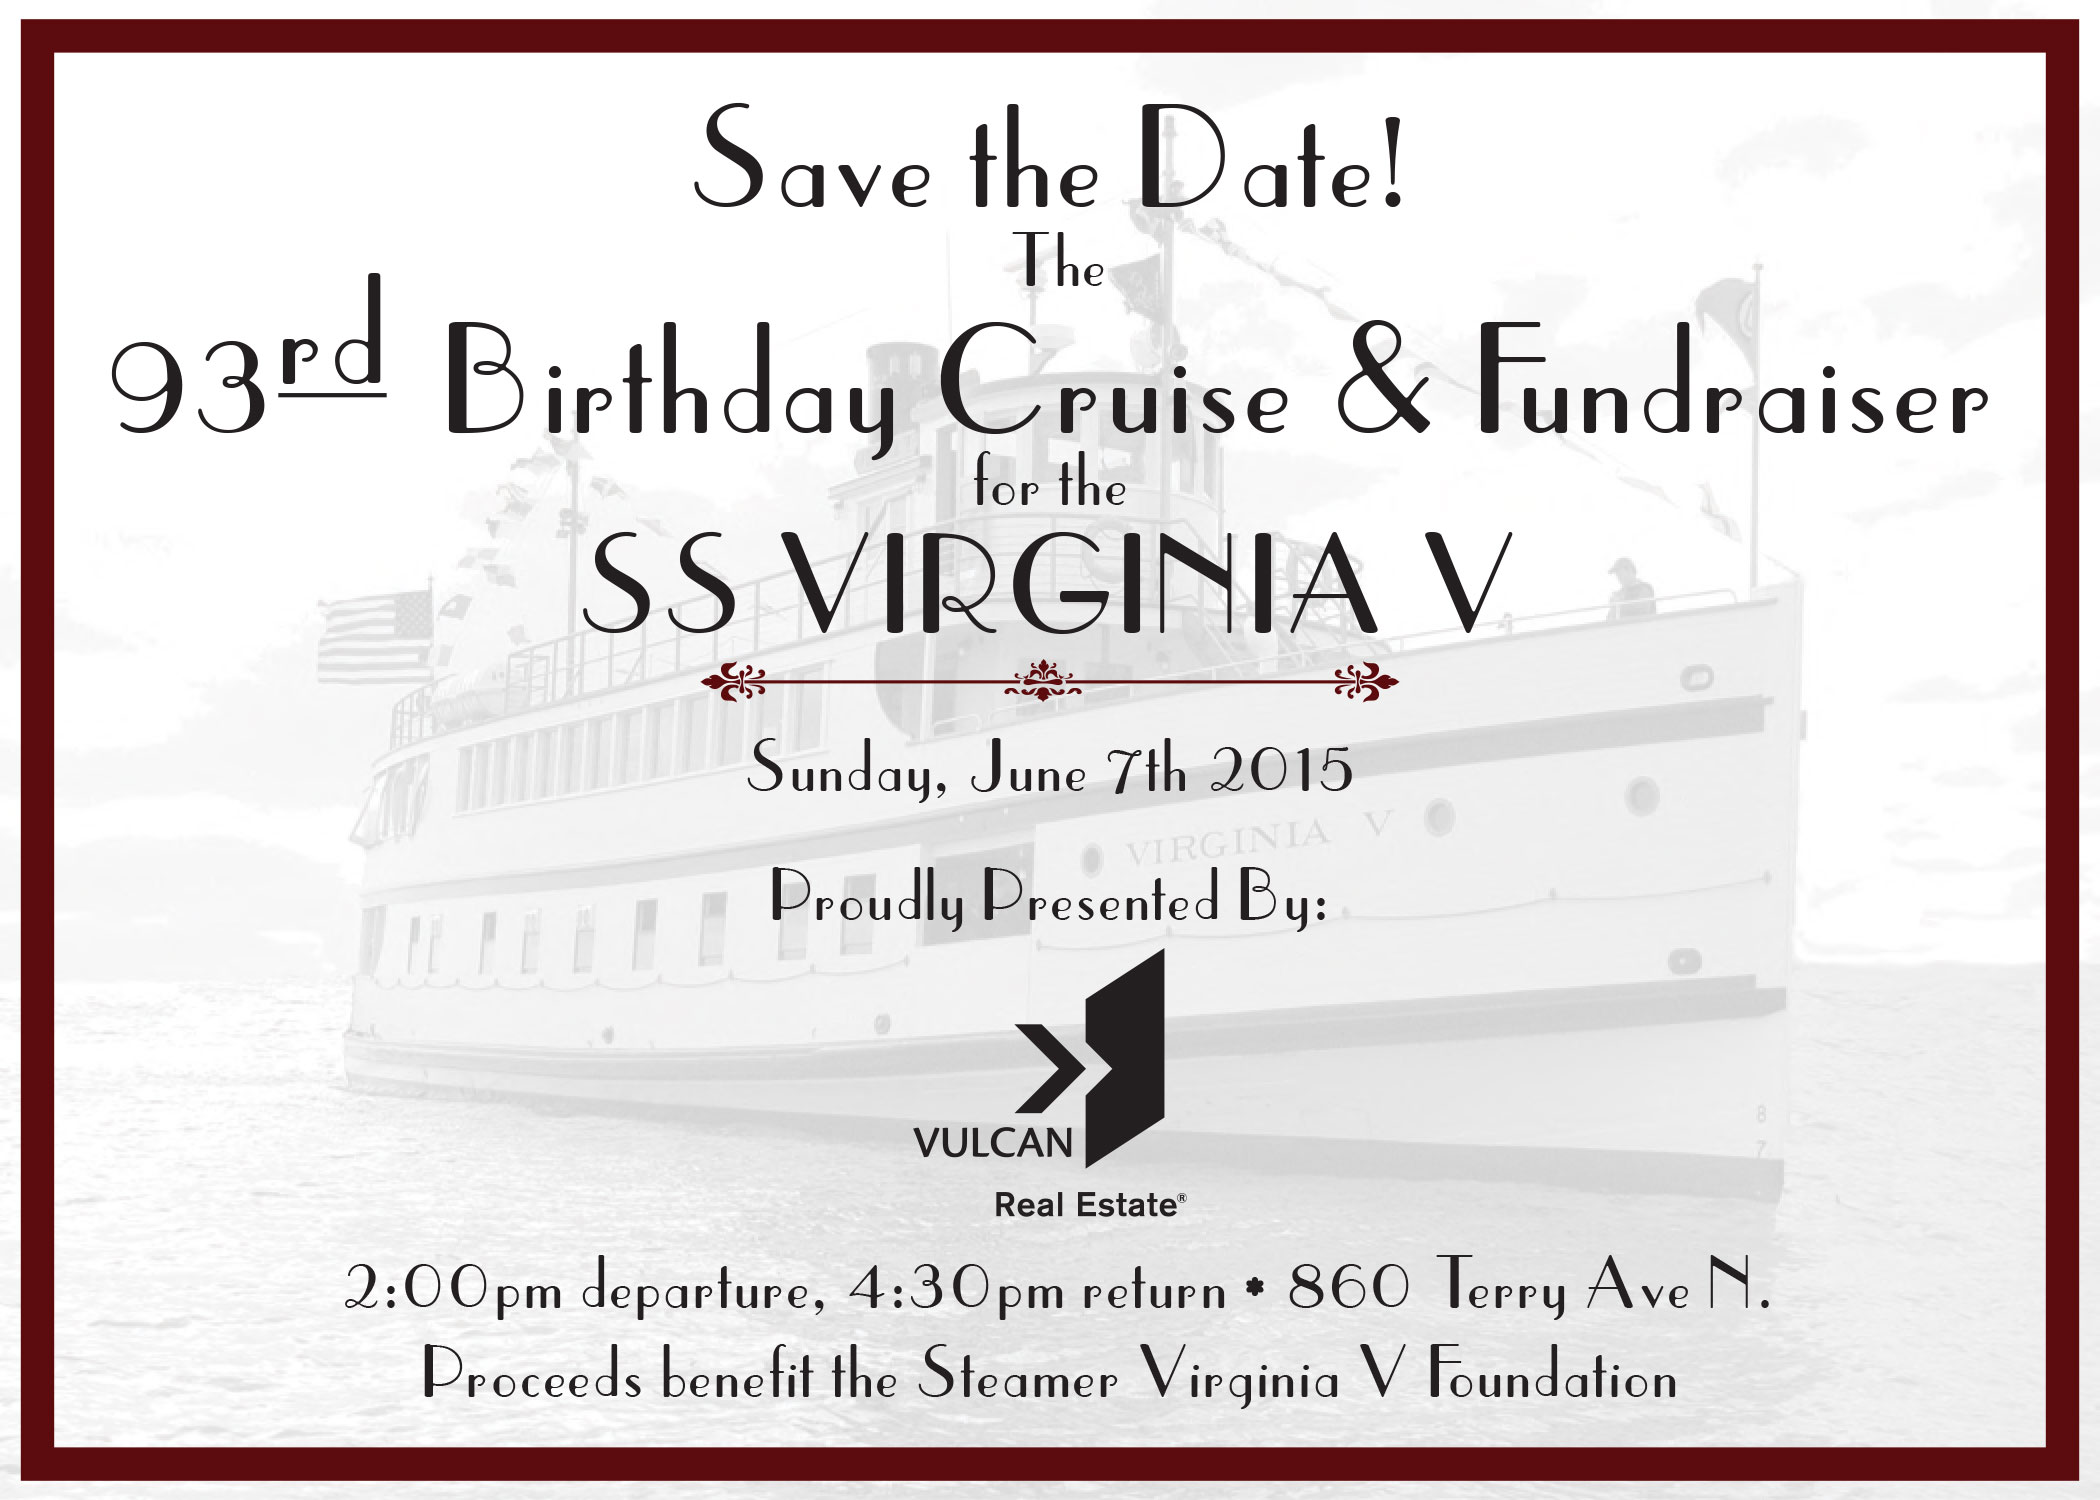 Take a ride on the steamship Virginia V